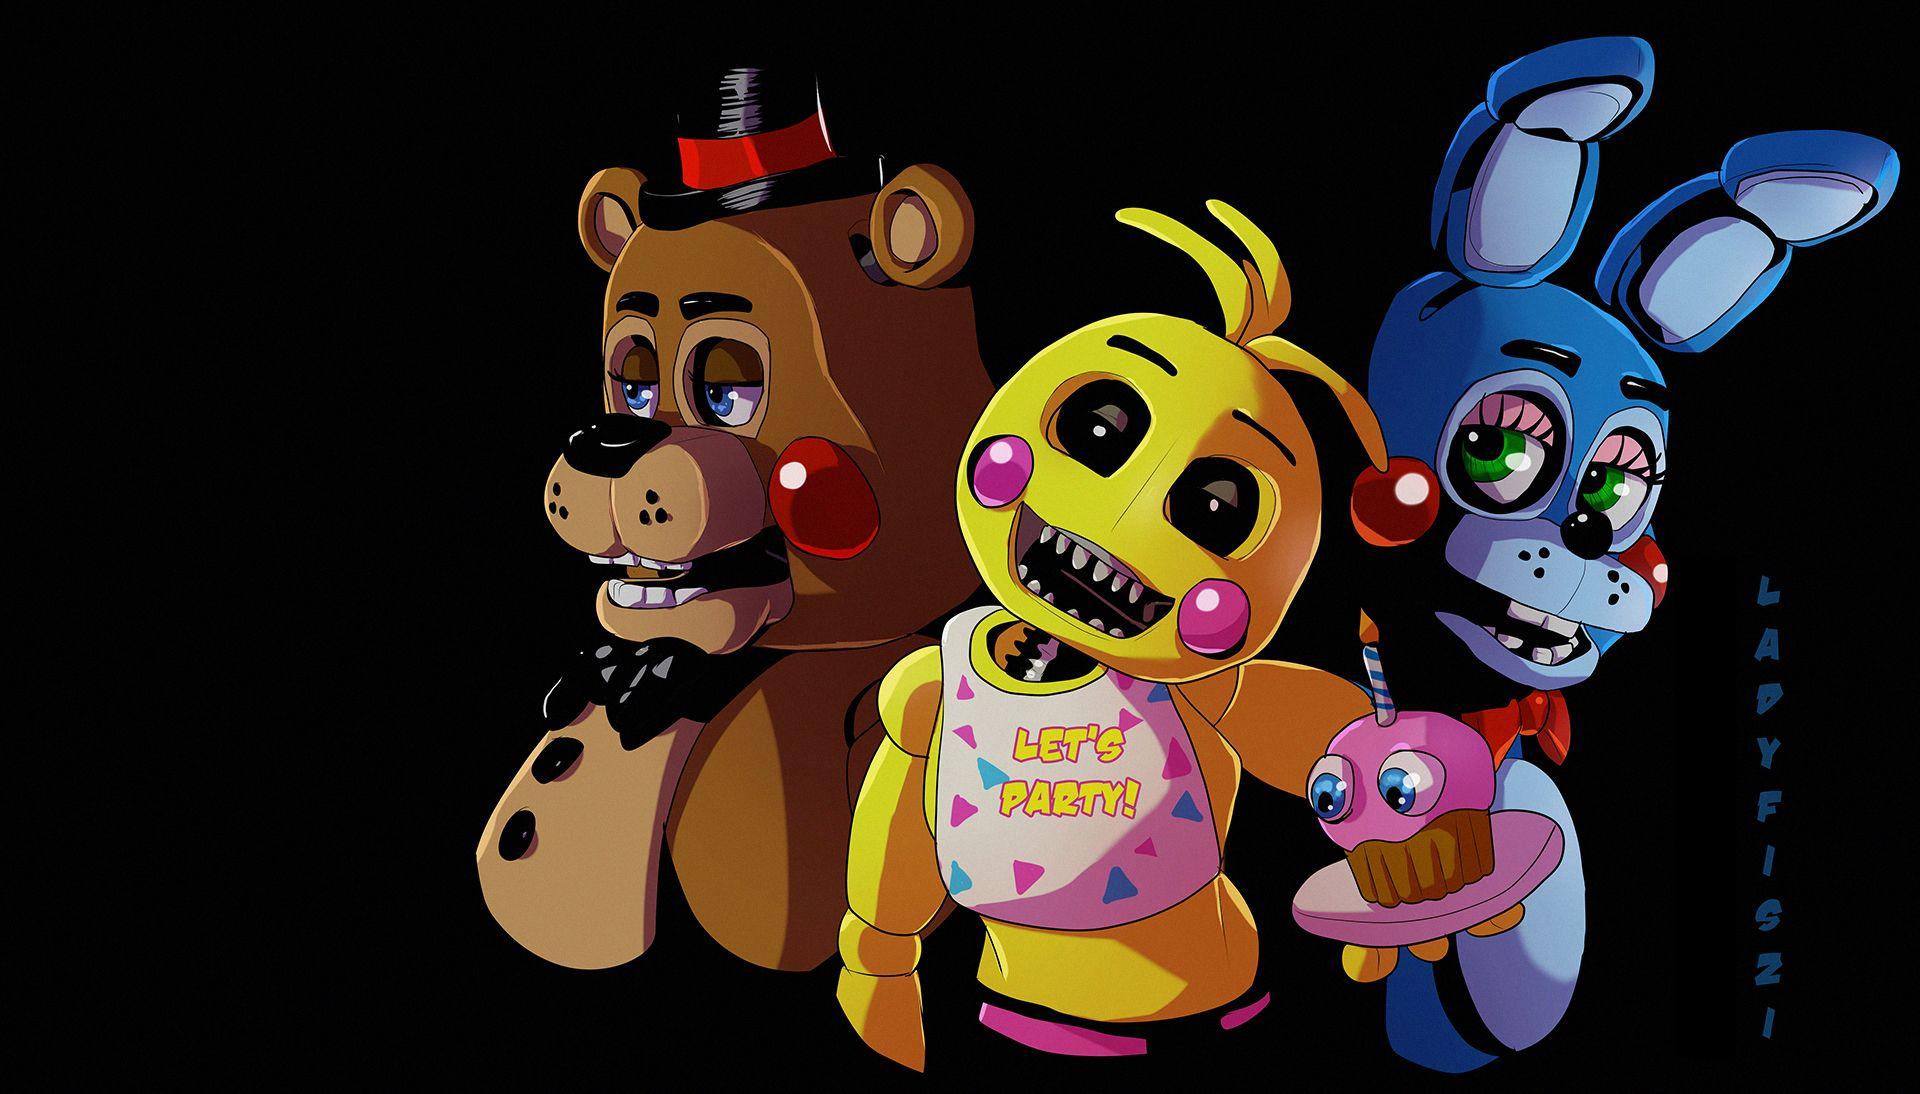 HD wallpaper: Five Nights at Freddy's, Five Nights At Freddy's 2